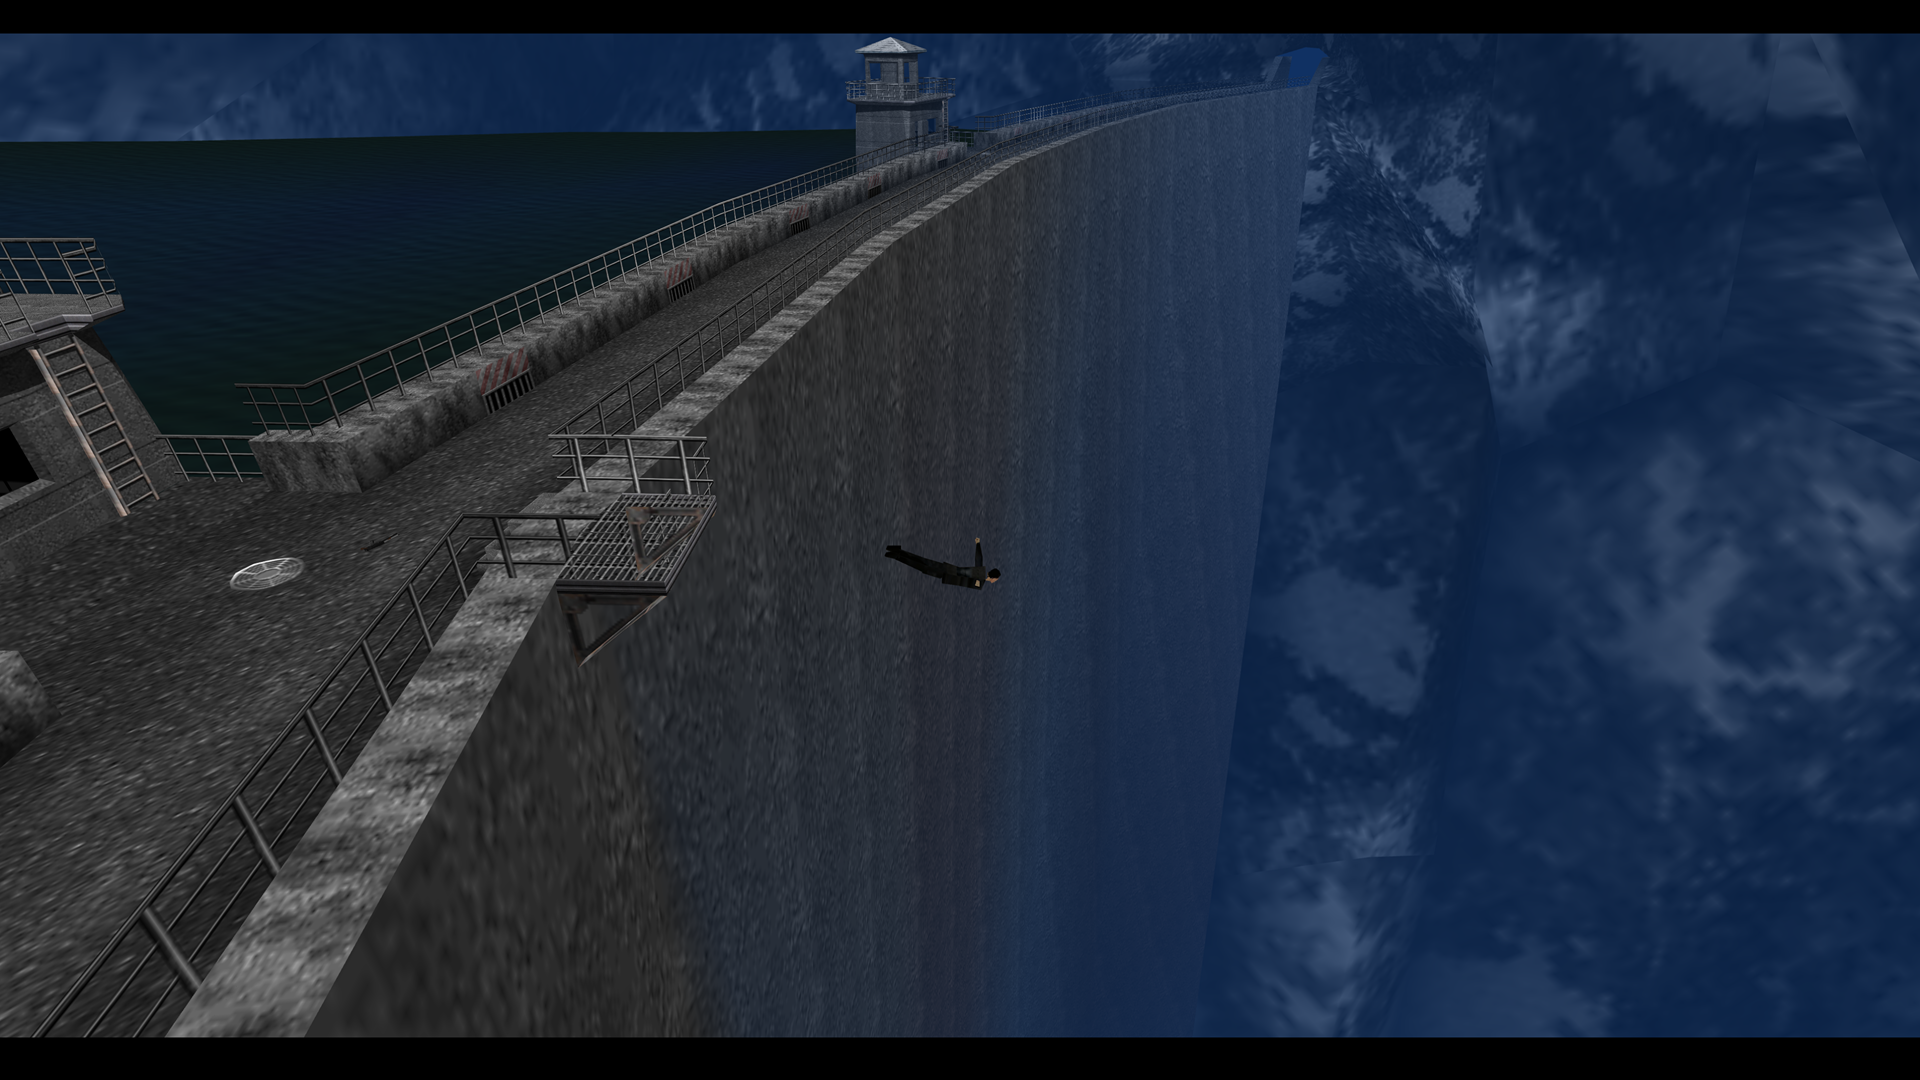 James Bond jumping from the Dam in GoldenEye 007